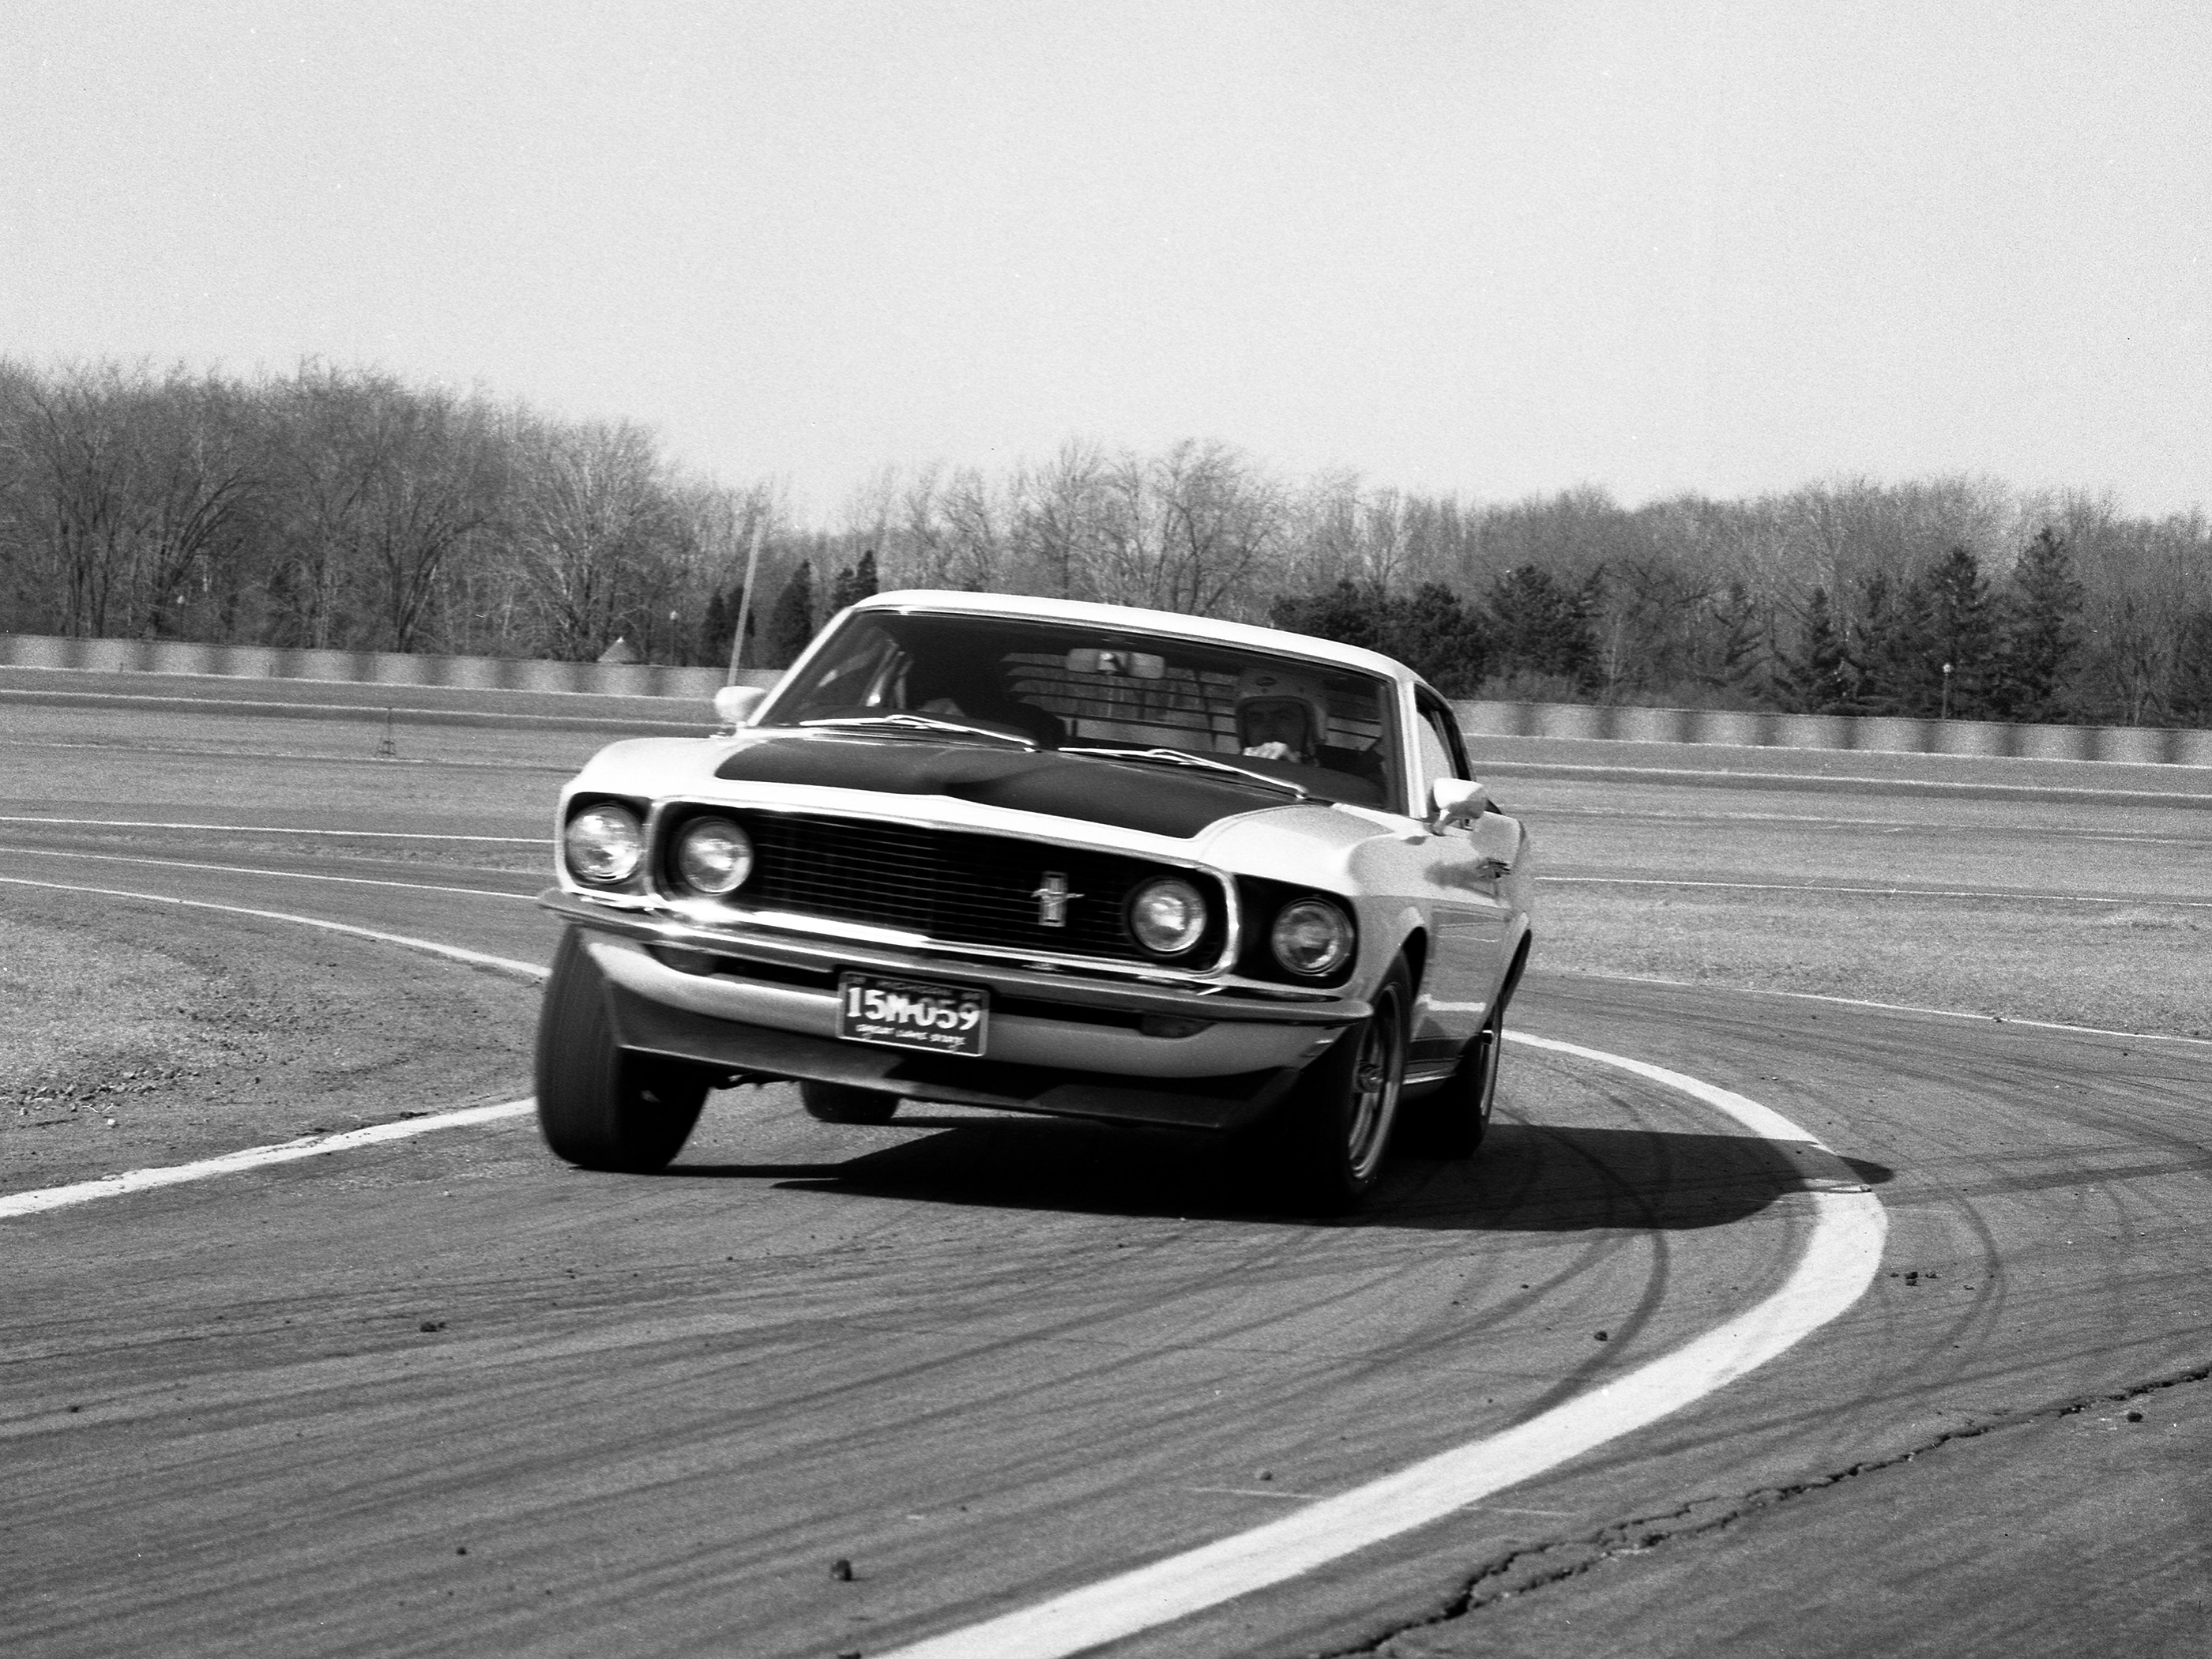  1969 Ford Mustang Boss 302 Wallpaper.